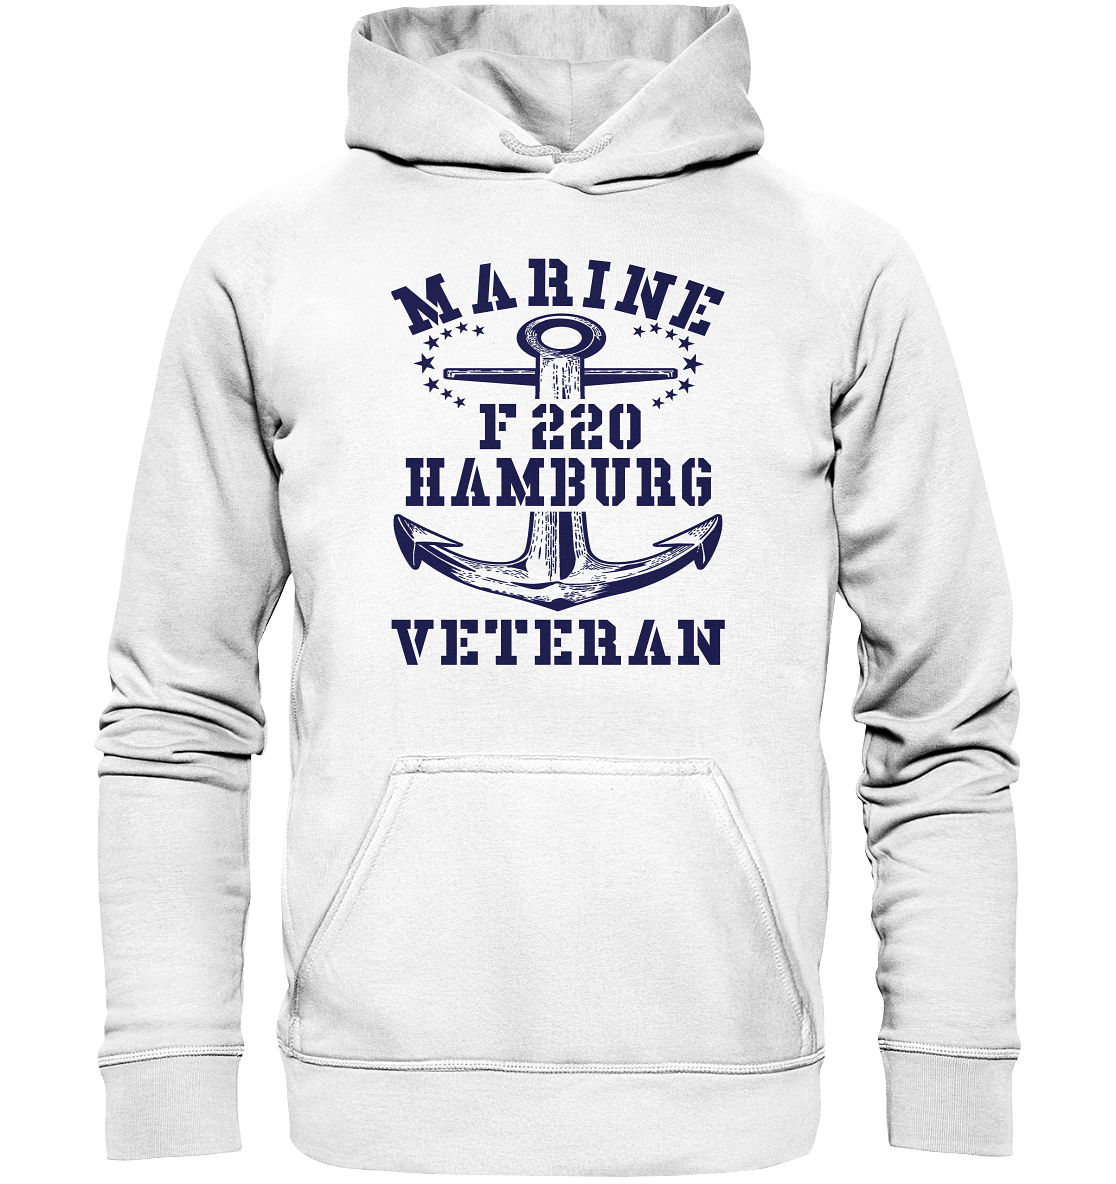 Fregatte F220 HAMBURG Marine Veteran - Basic Unisex Hoodie